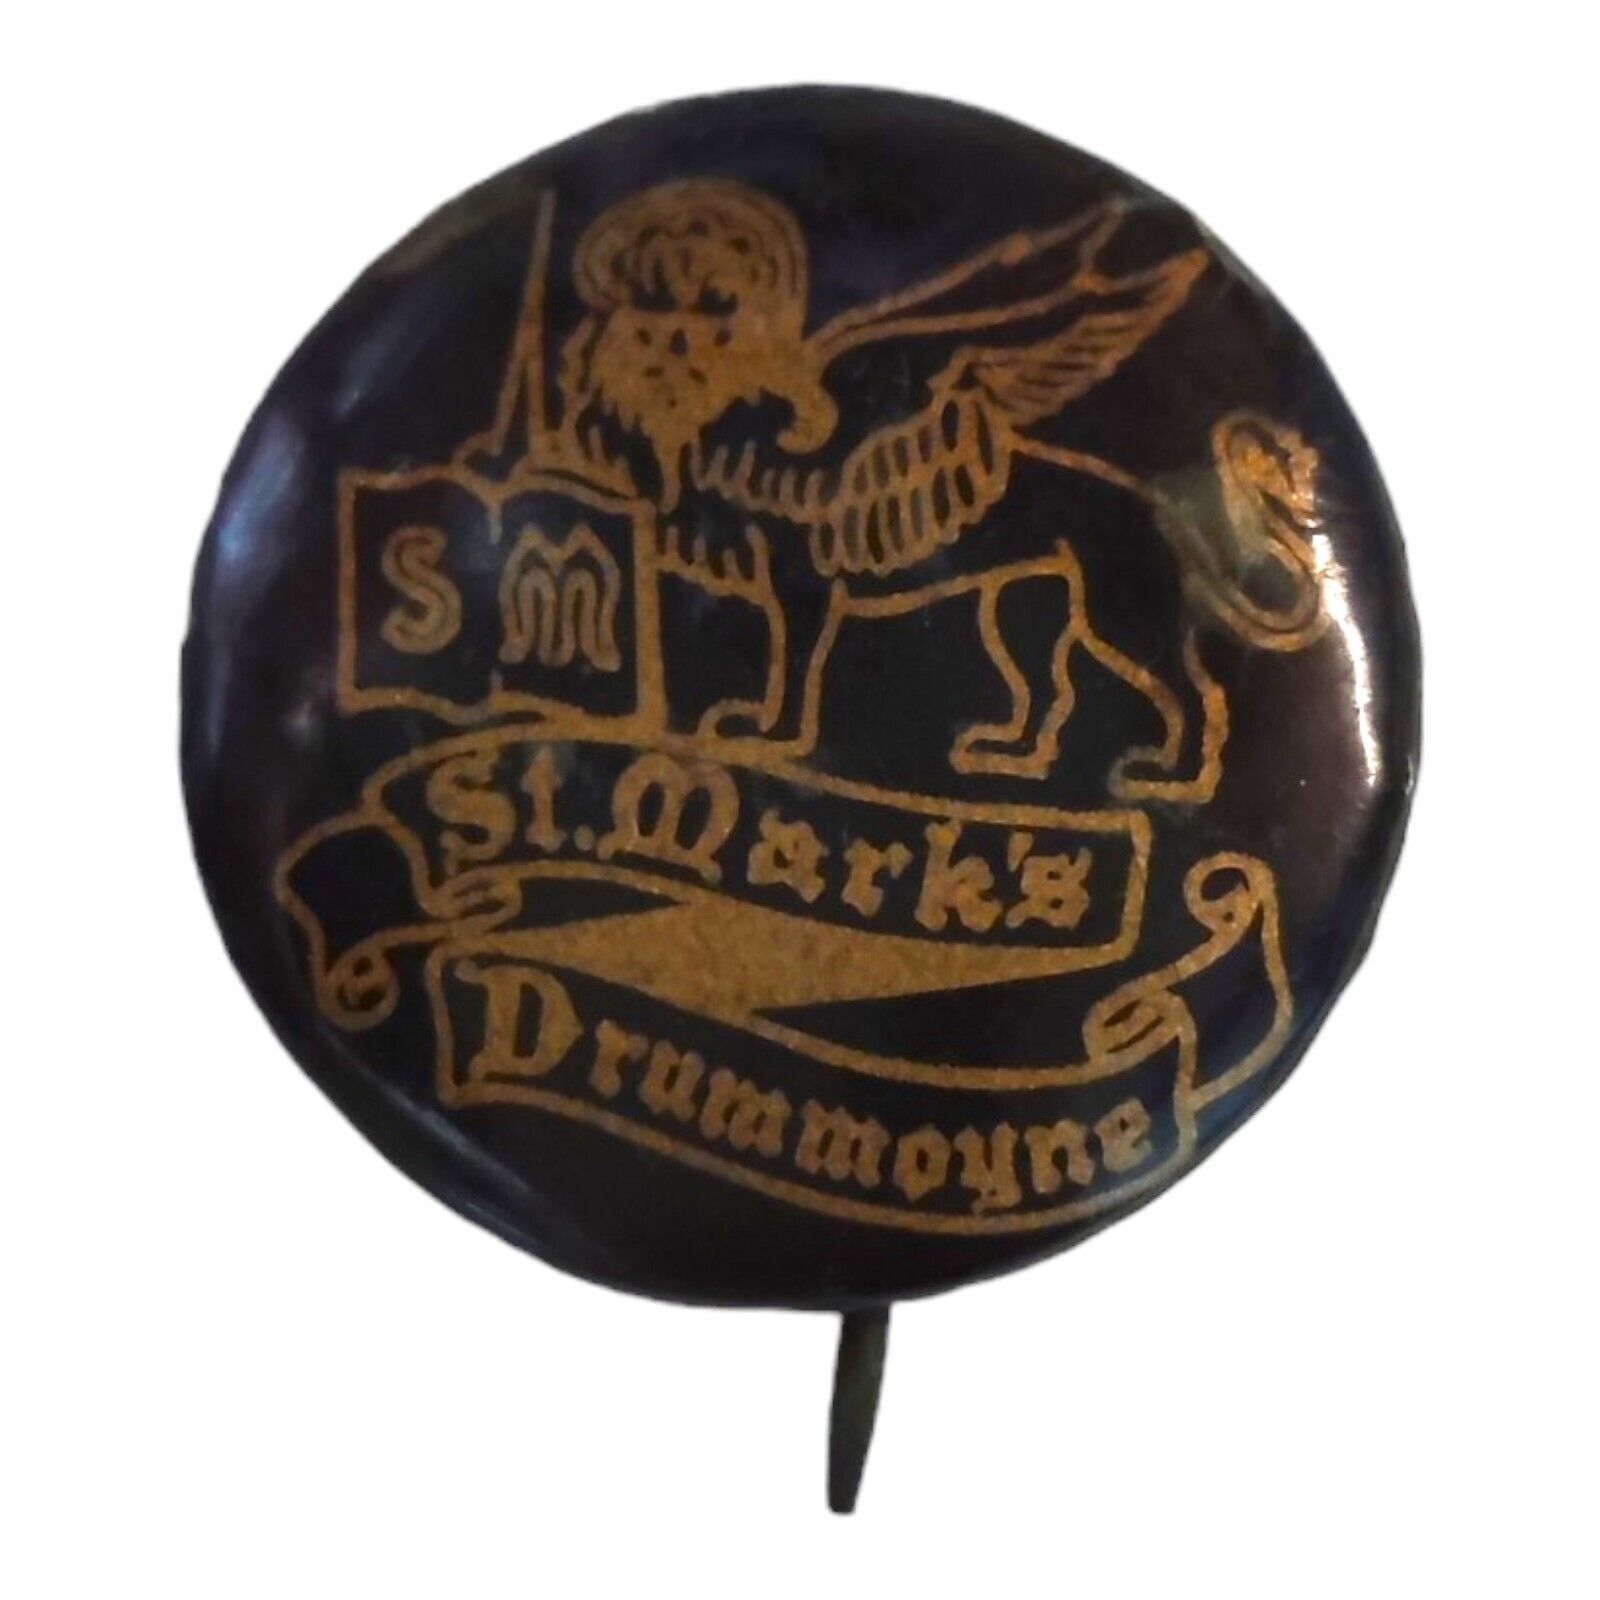 Vintage St. Mark’s Drummoyne School-Church Pin Badge - Collectible Memorabilia